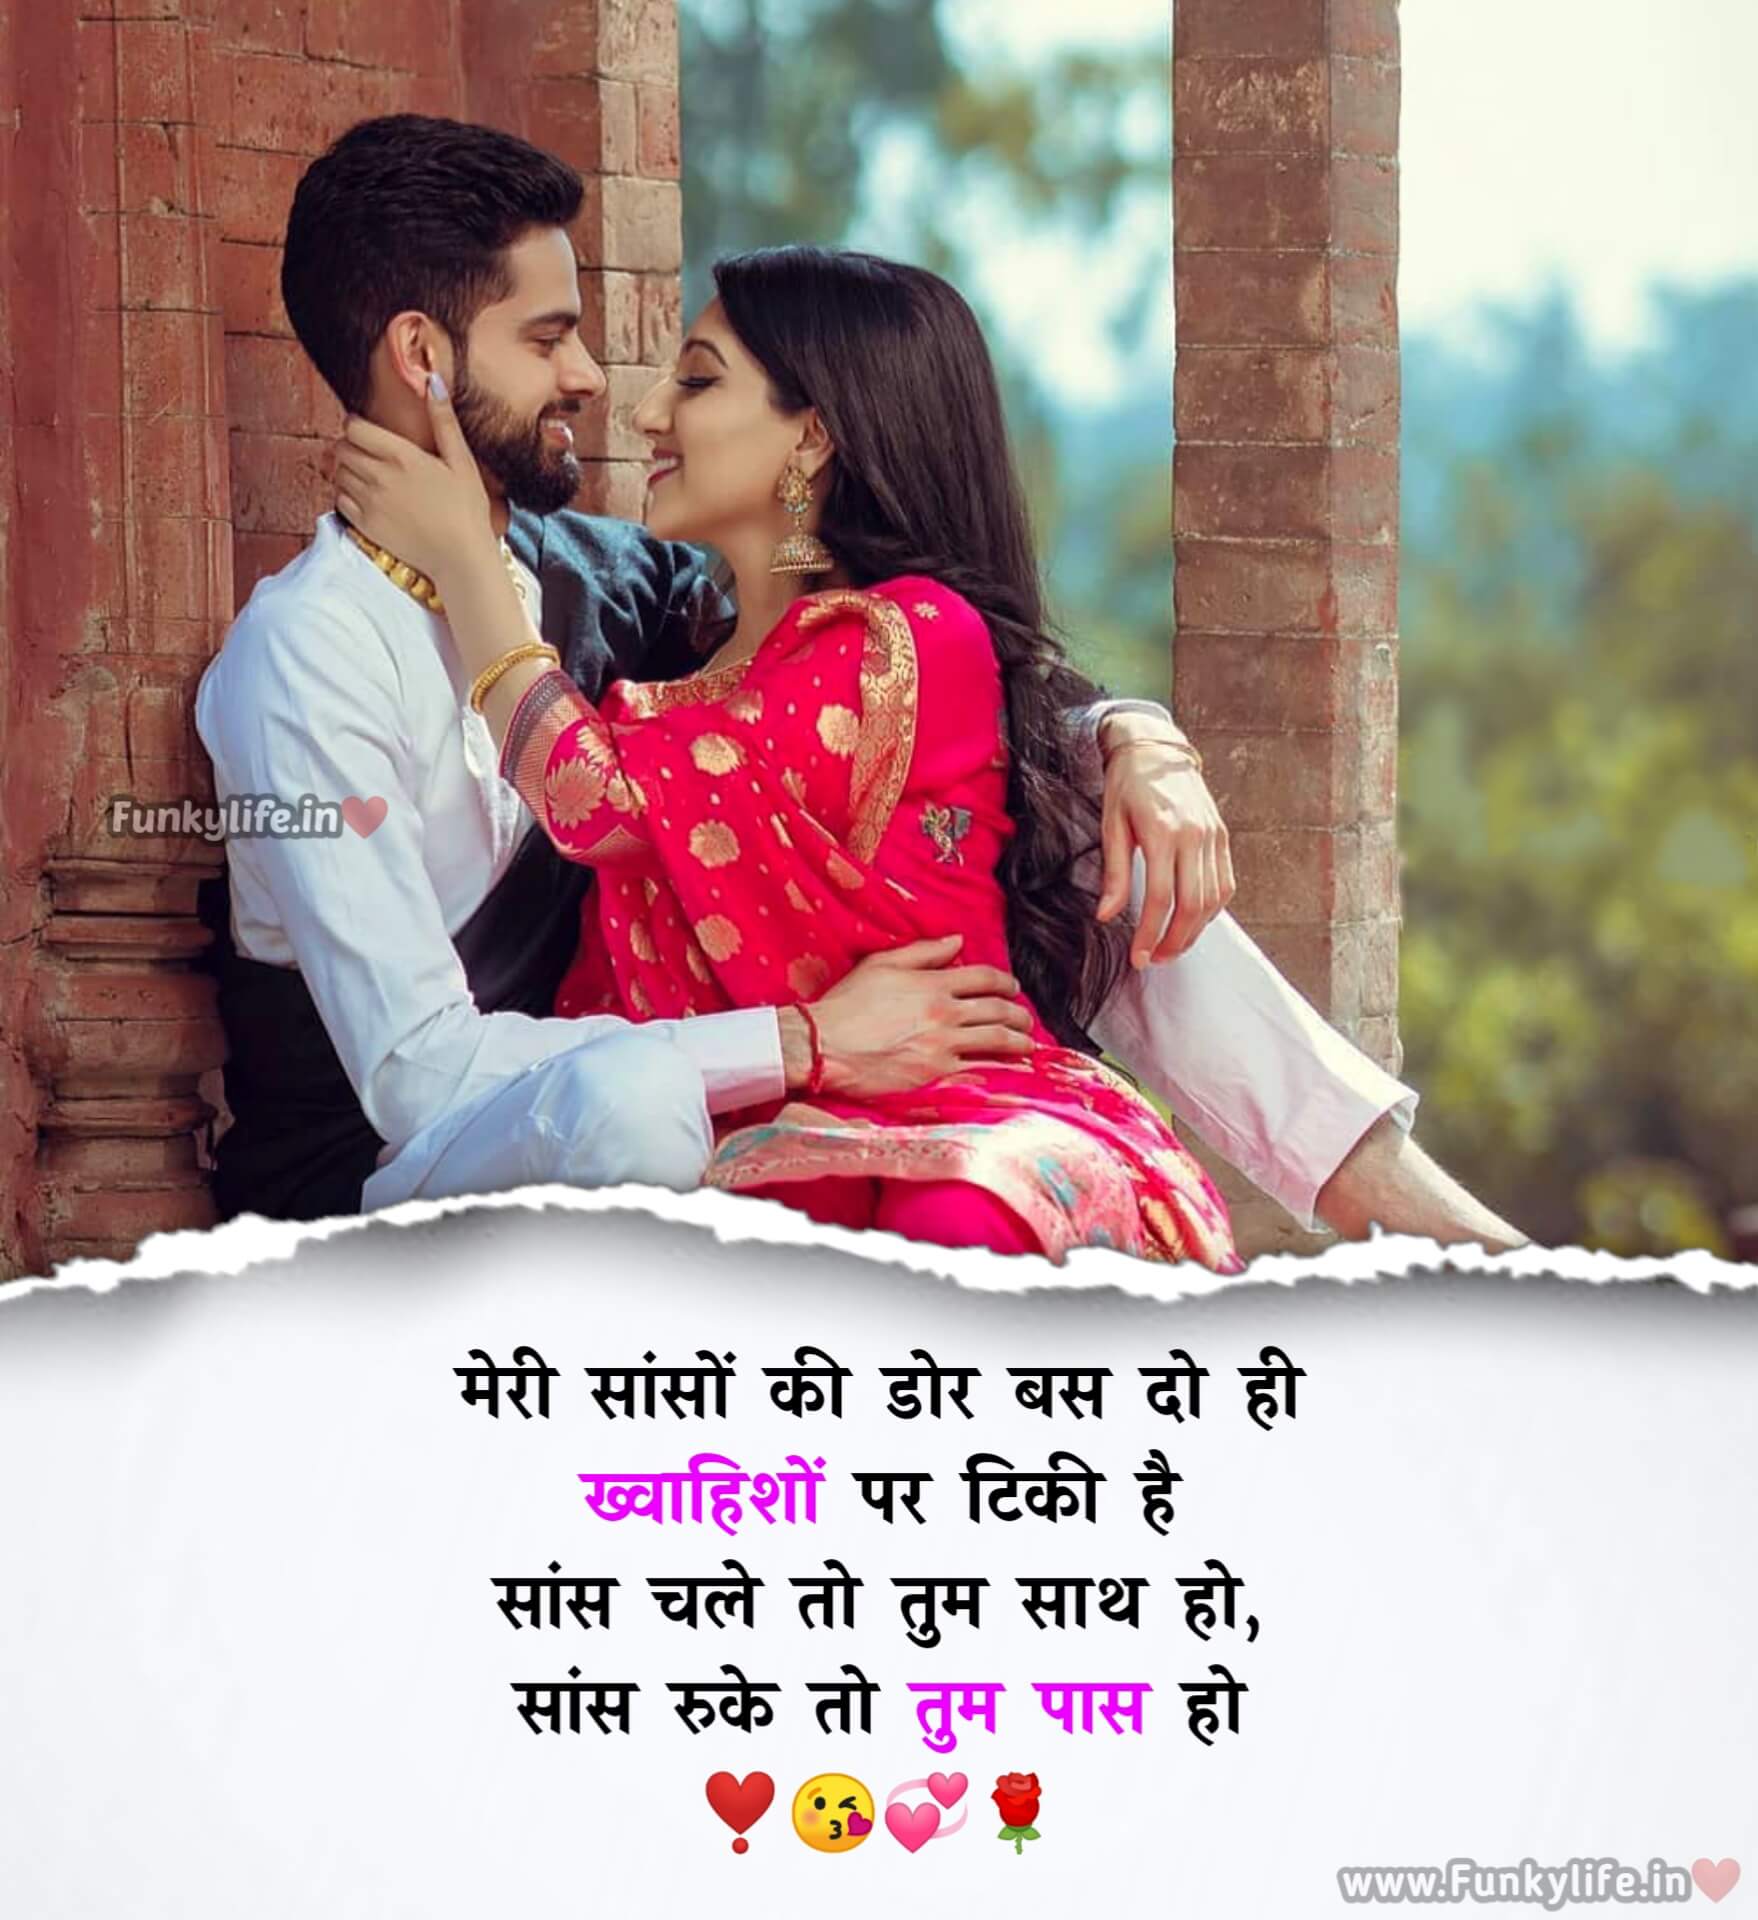 Love Shayari In Hindi #9 - Funky Life